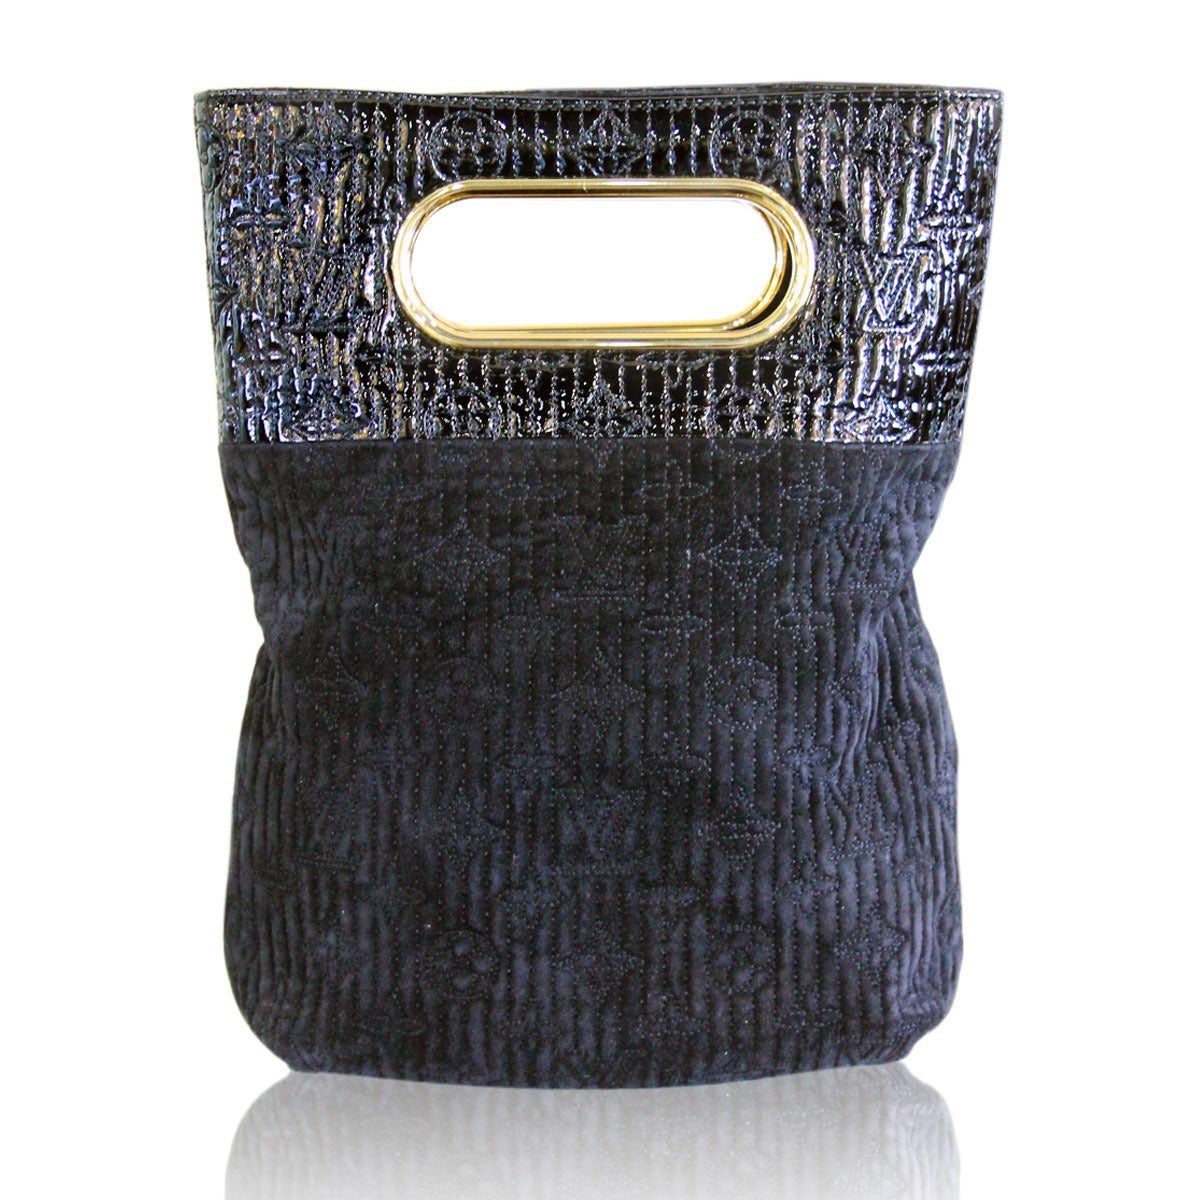 Brand: Louis Vuitton
Style: Clutch
Handles: No Straps; Gold Tone Handle
Measurements: Folded: 8